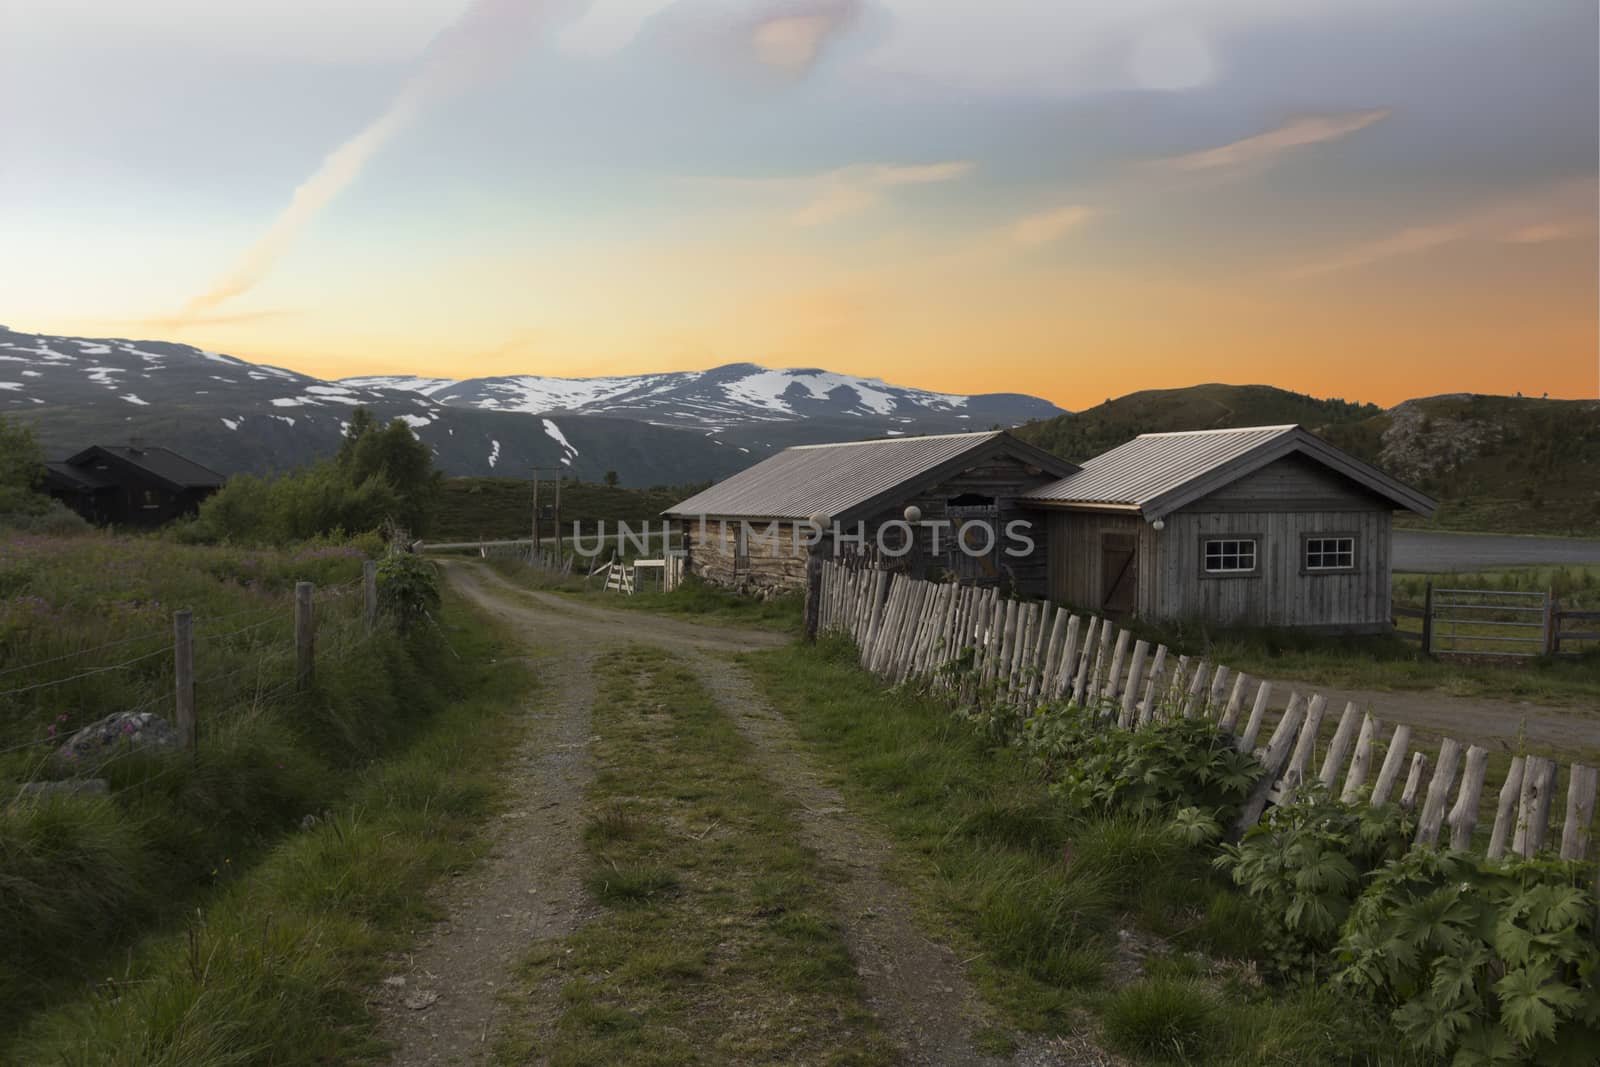 A cabin in Norwegian mountains jotunheimen on a wonderfull day